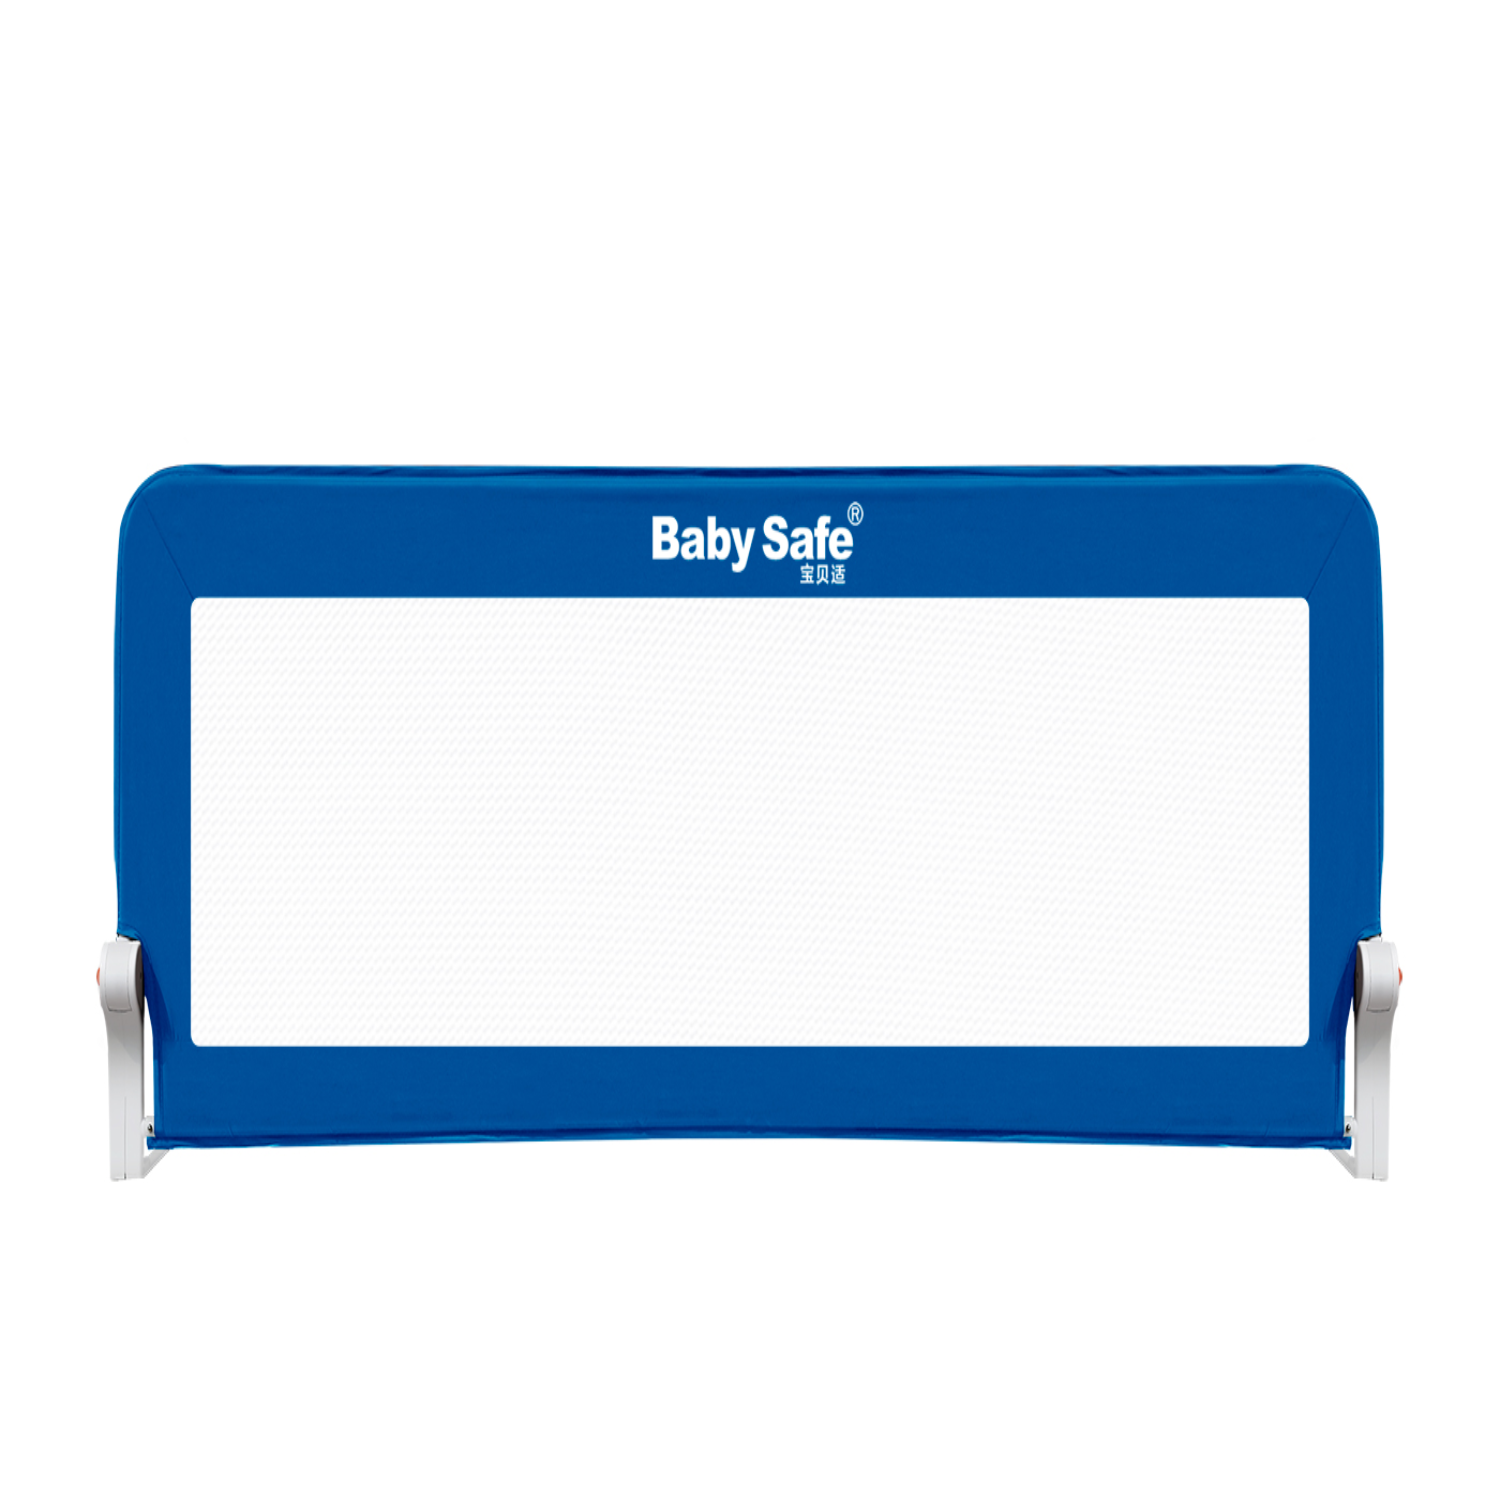 Барьер защитный для кровати Baby Safe 120х42 синий - фото 1